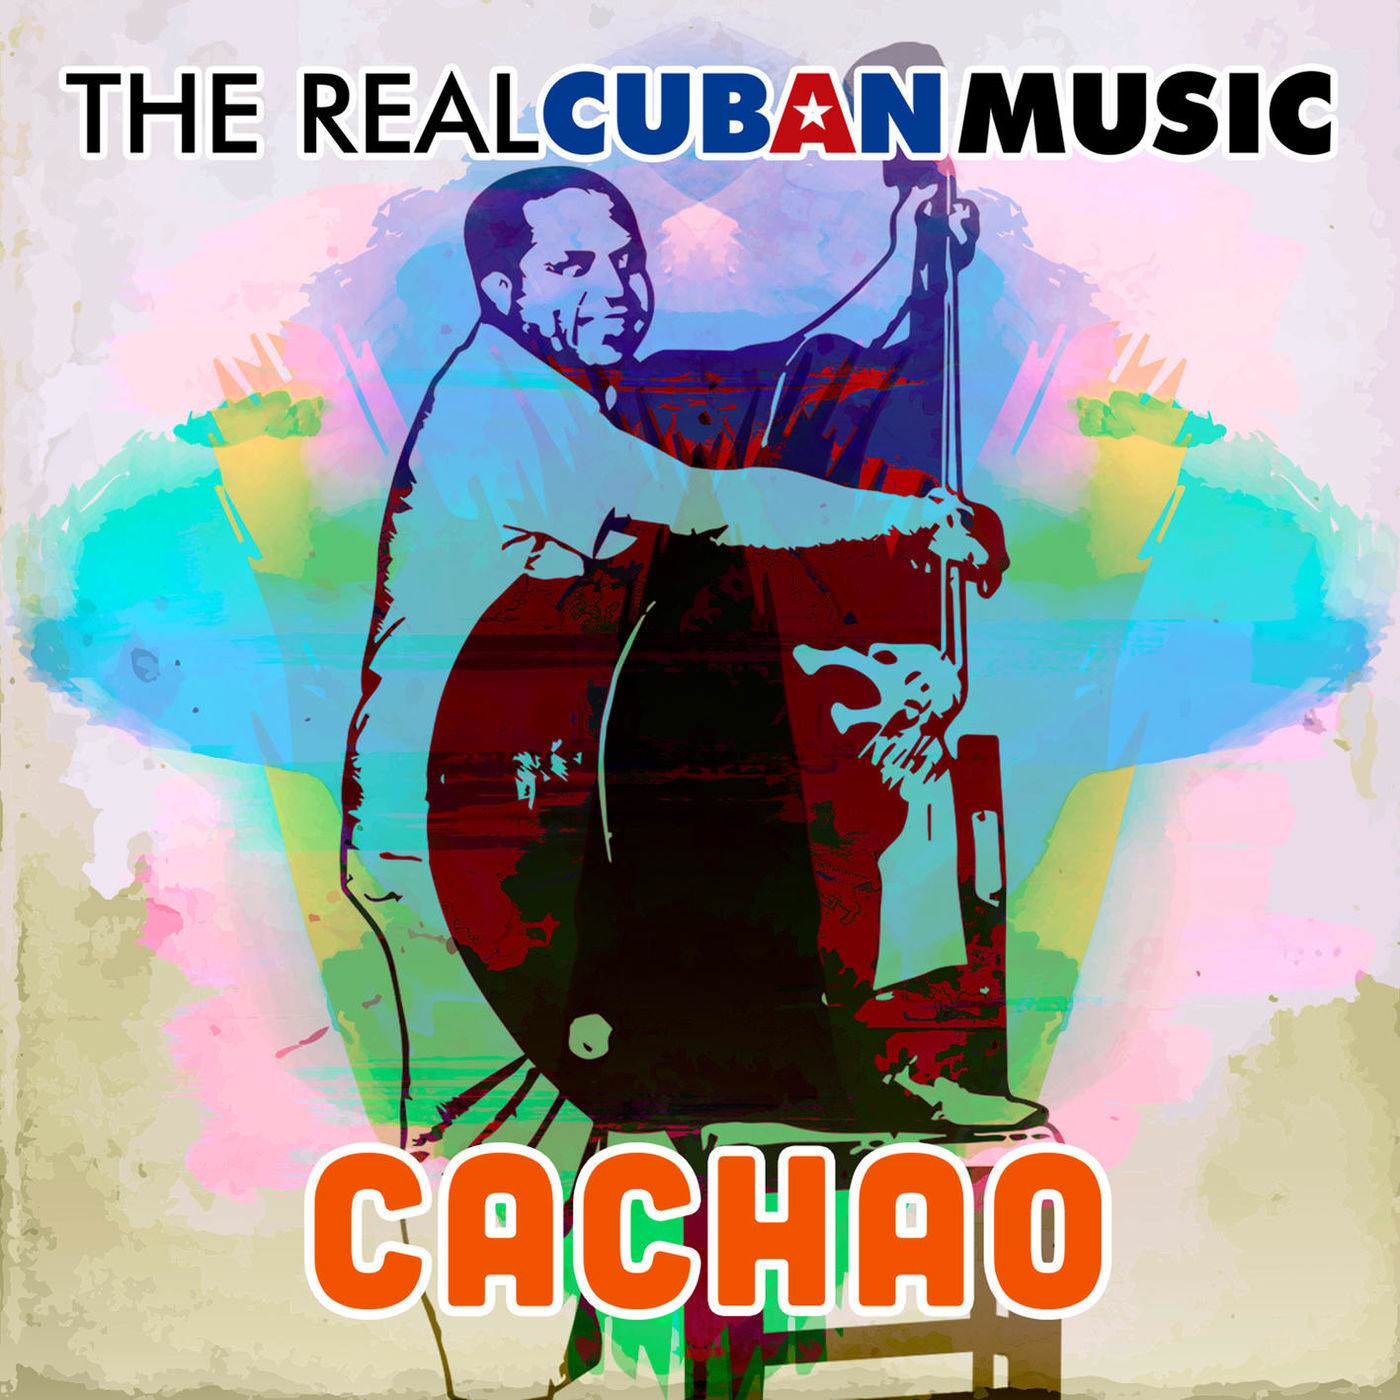 Cachao - The Real Cuban Music (Remasterizado) (2018) [FLAC 24bit/44,1kHz]